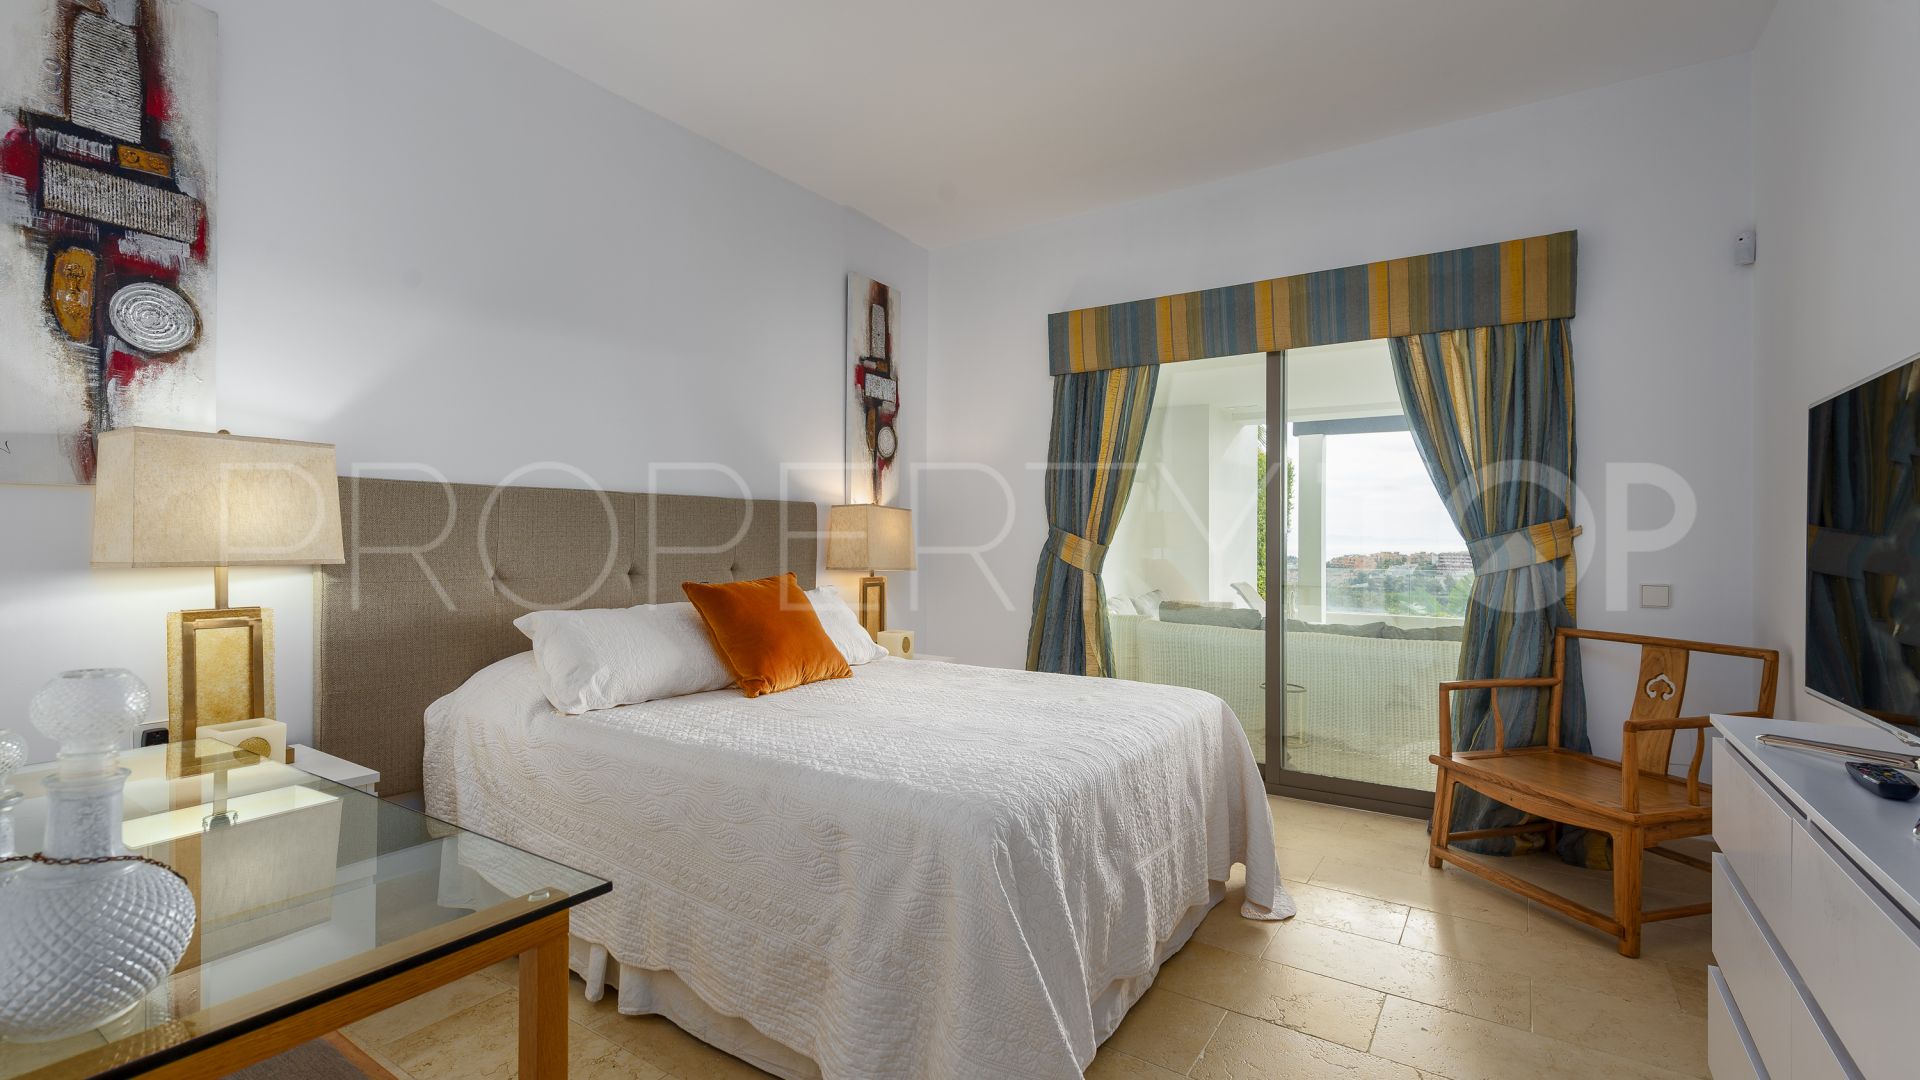 For sale ground floor apartment in Finca Cortesin with 2 bedrooms